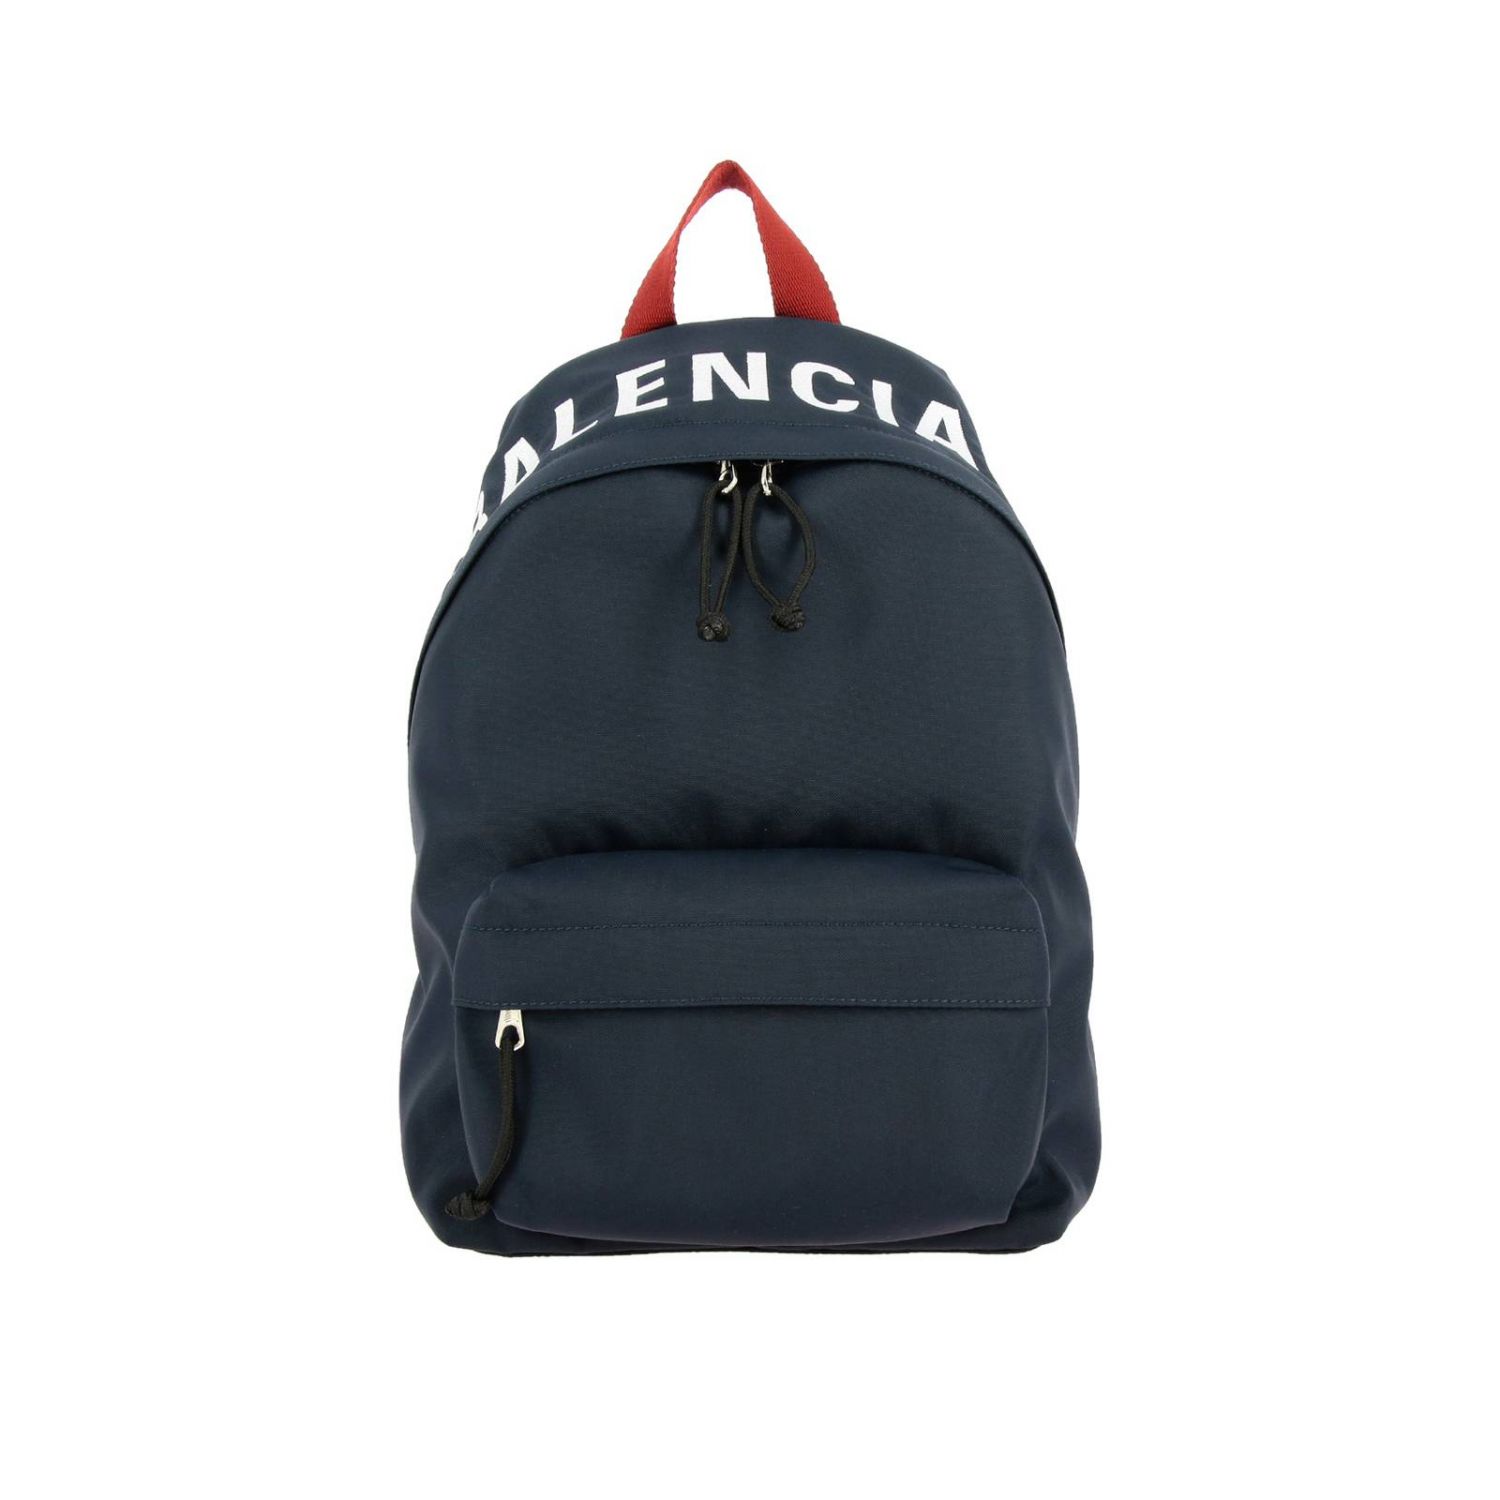 balenciaga blue backpack